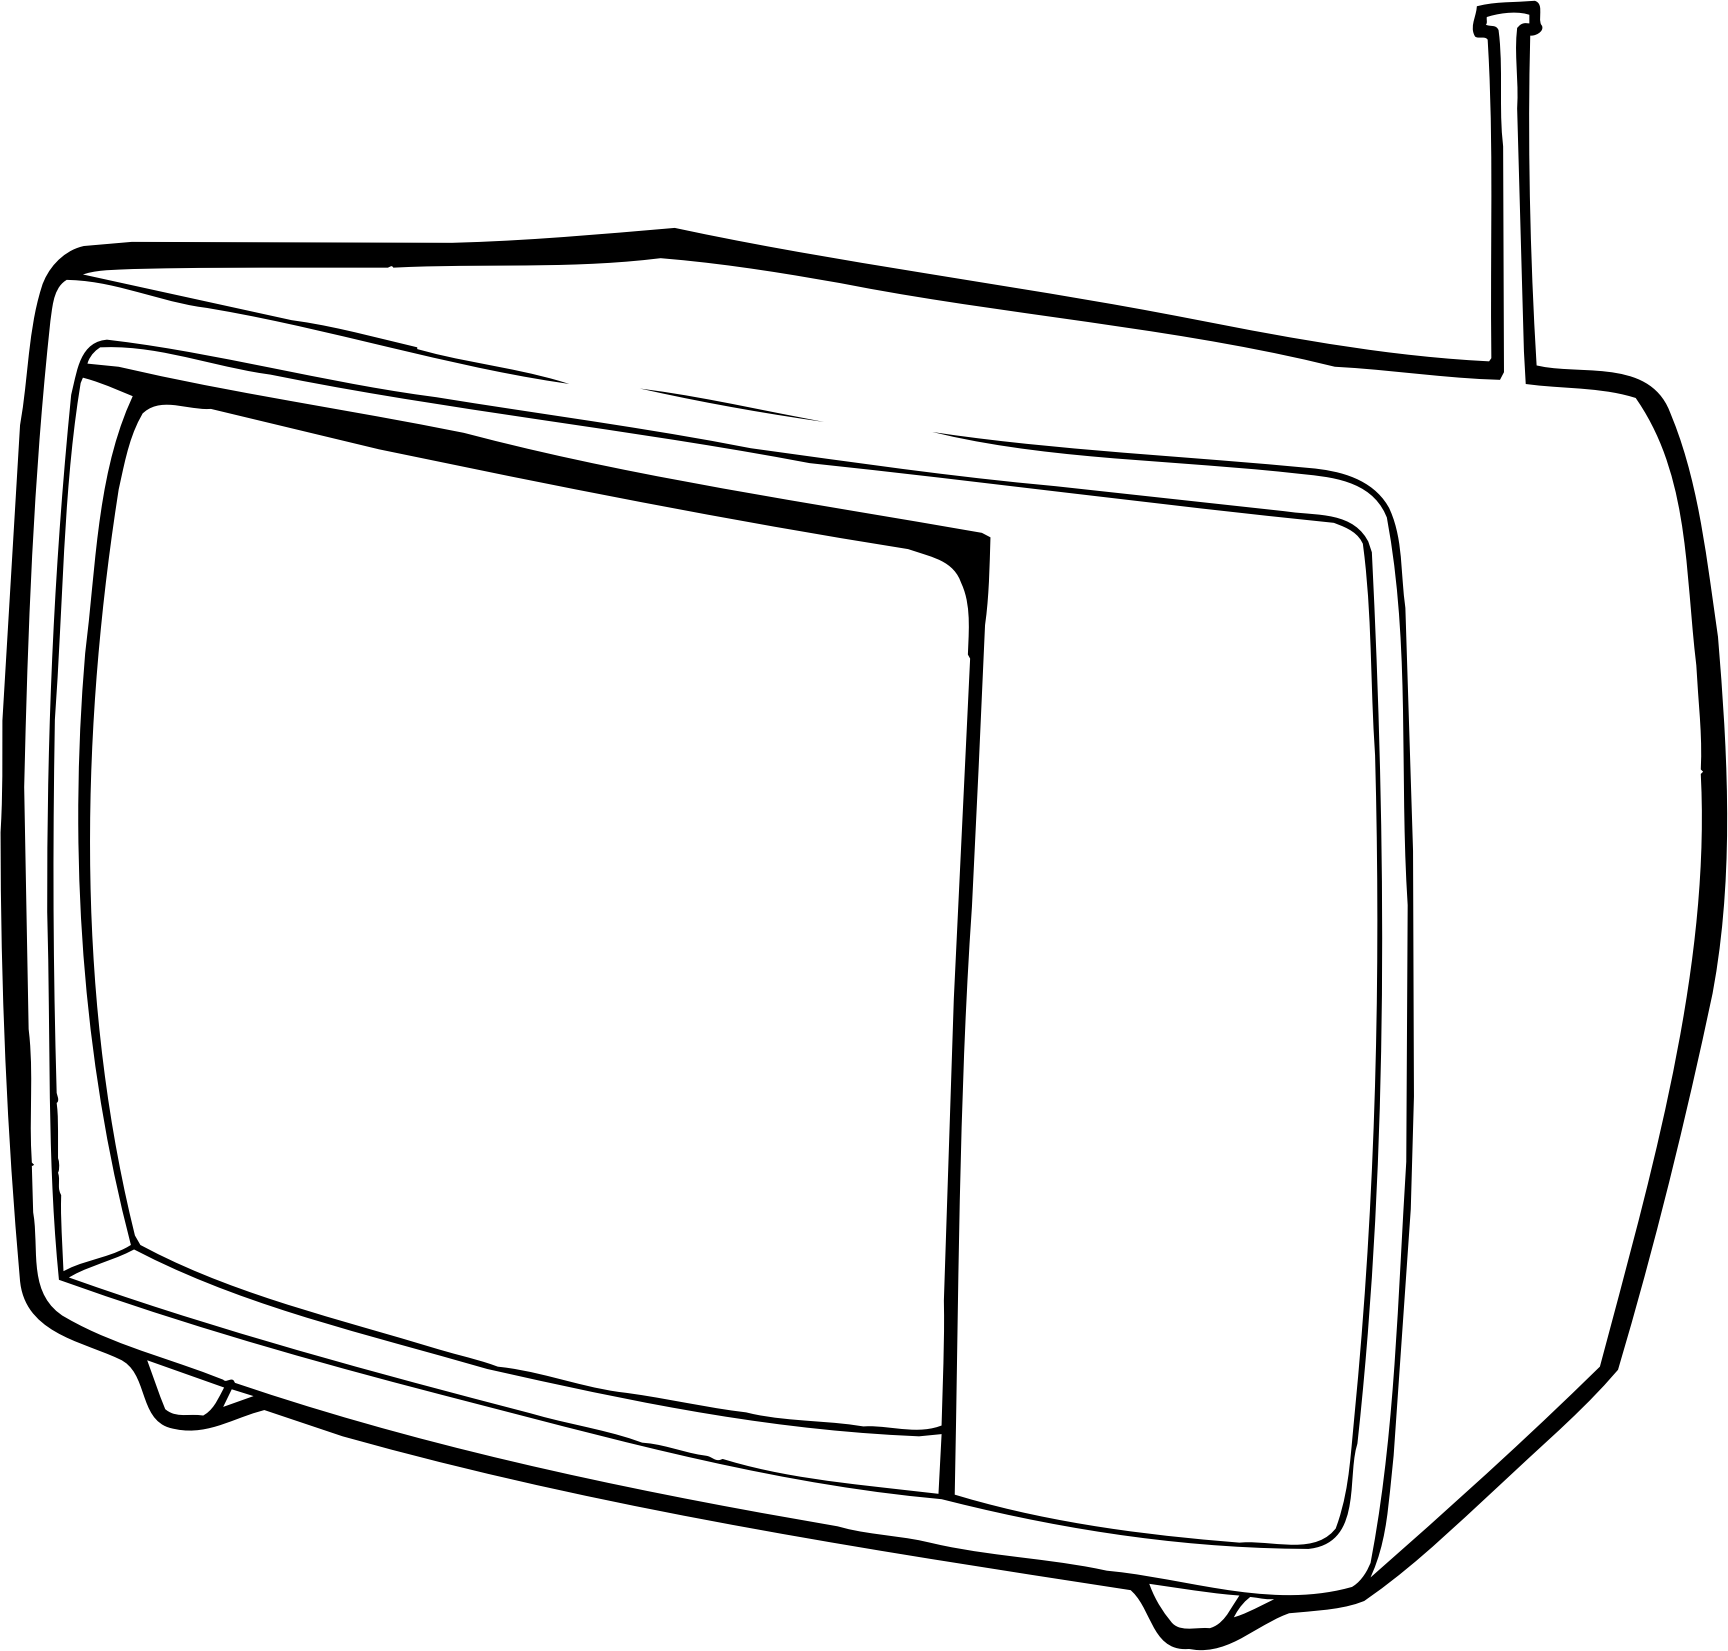 television clip art black and white